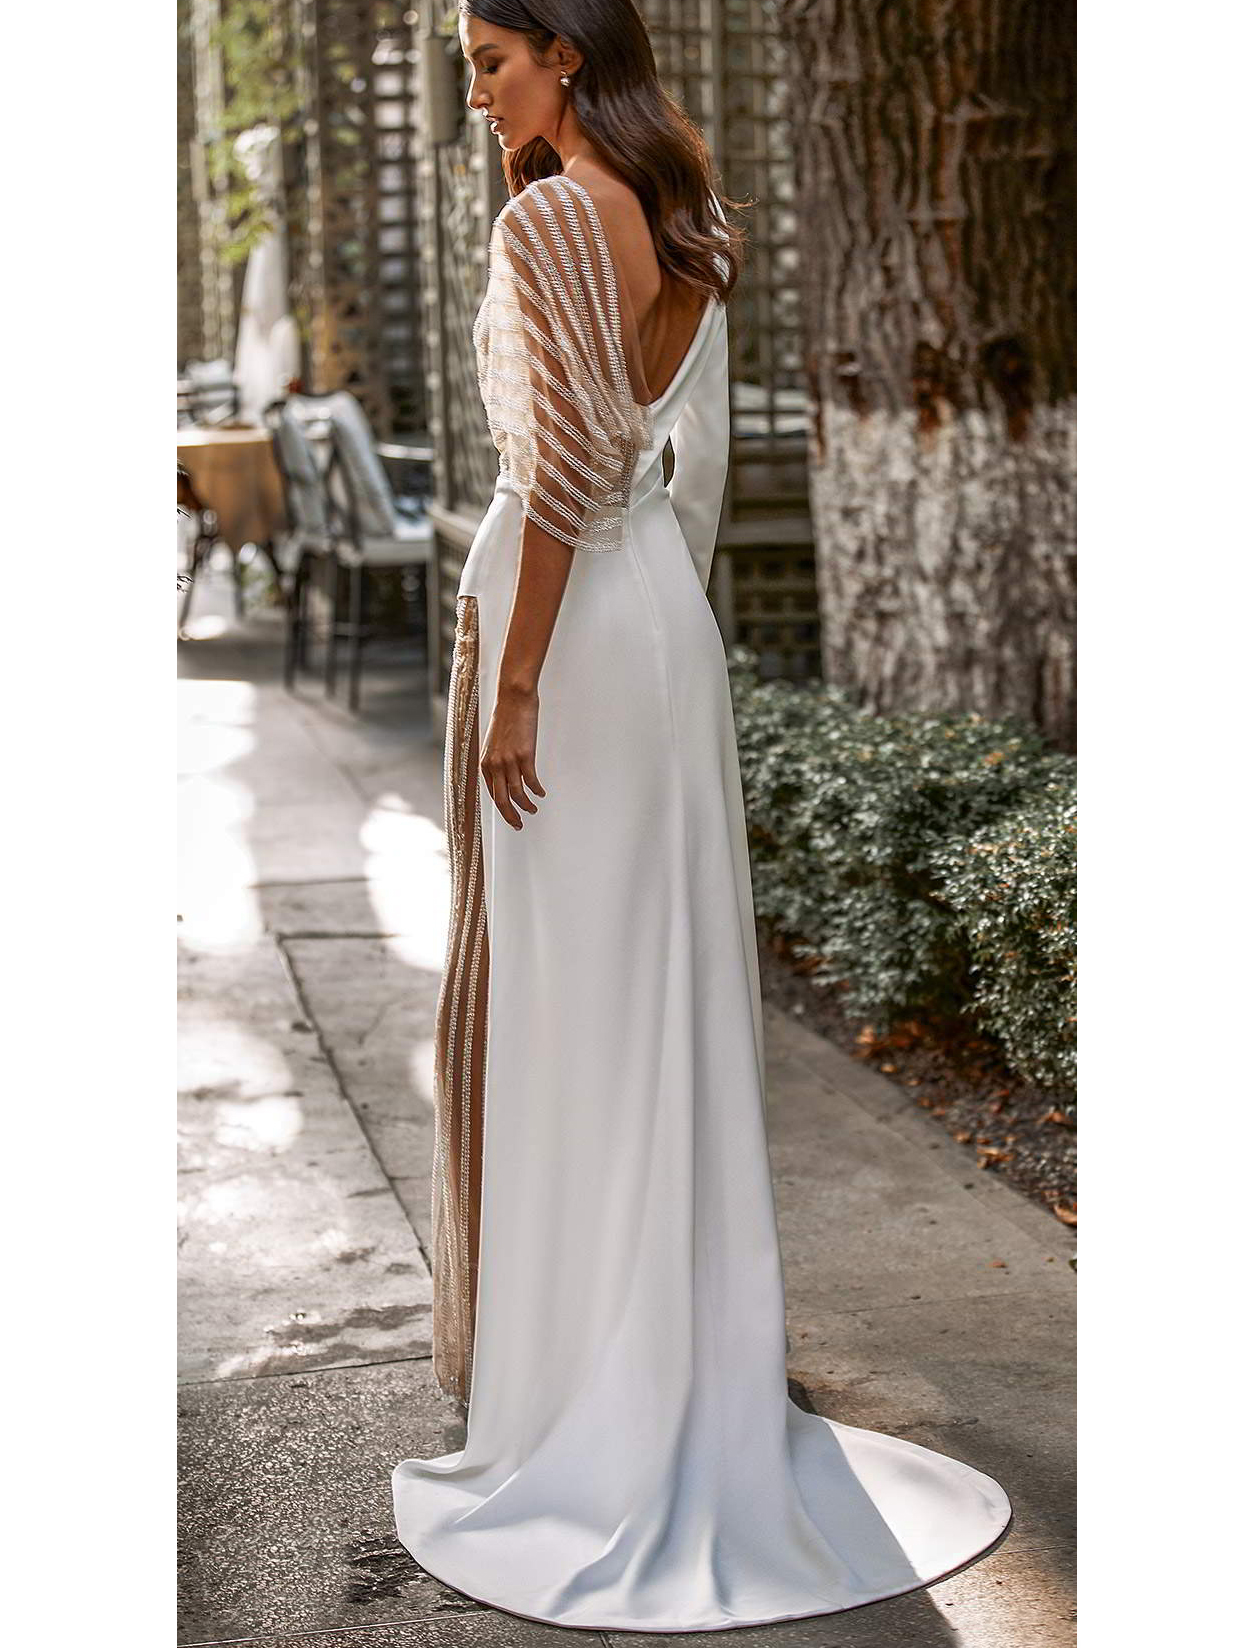 katy-corso-2021-bridal-long-sleeve-collar-v-neckline-clean-minimalist-pant-a-line-wedding-dress-3 (2).jpg